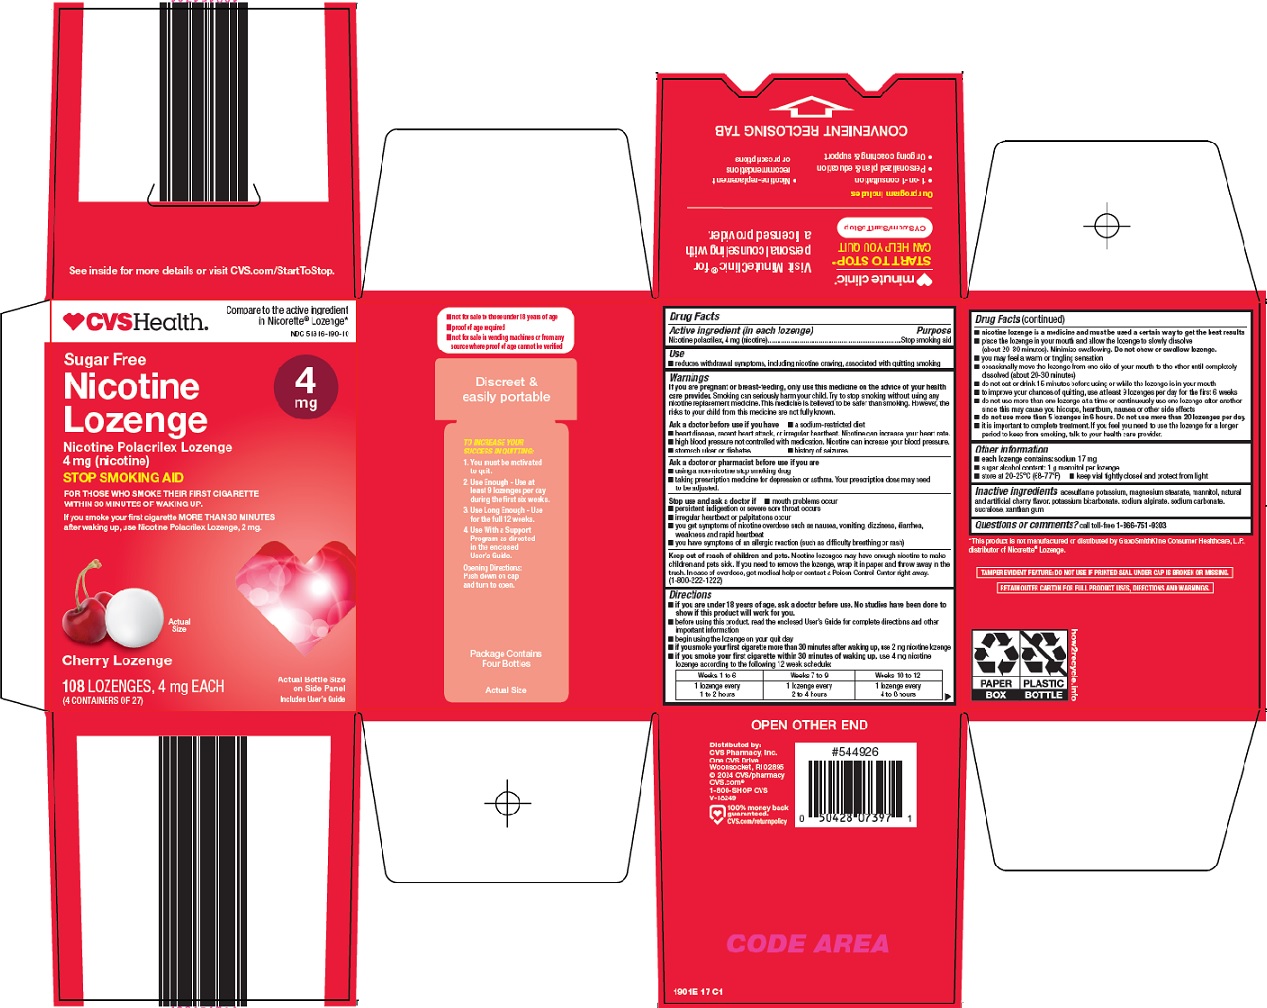 Nicotine Lozenge Carton Image